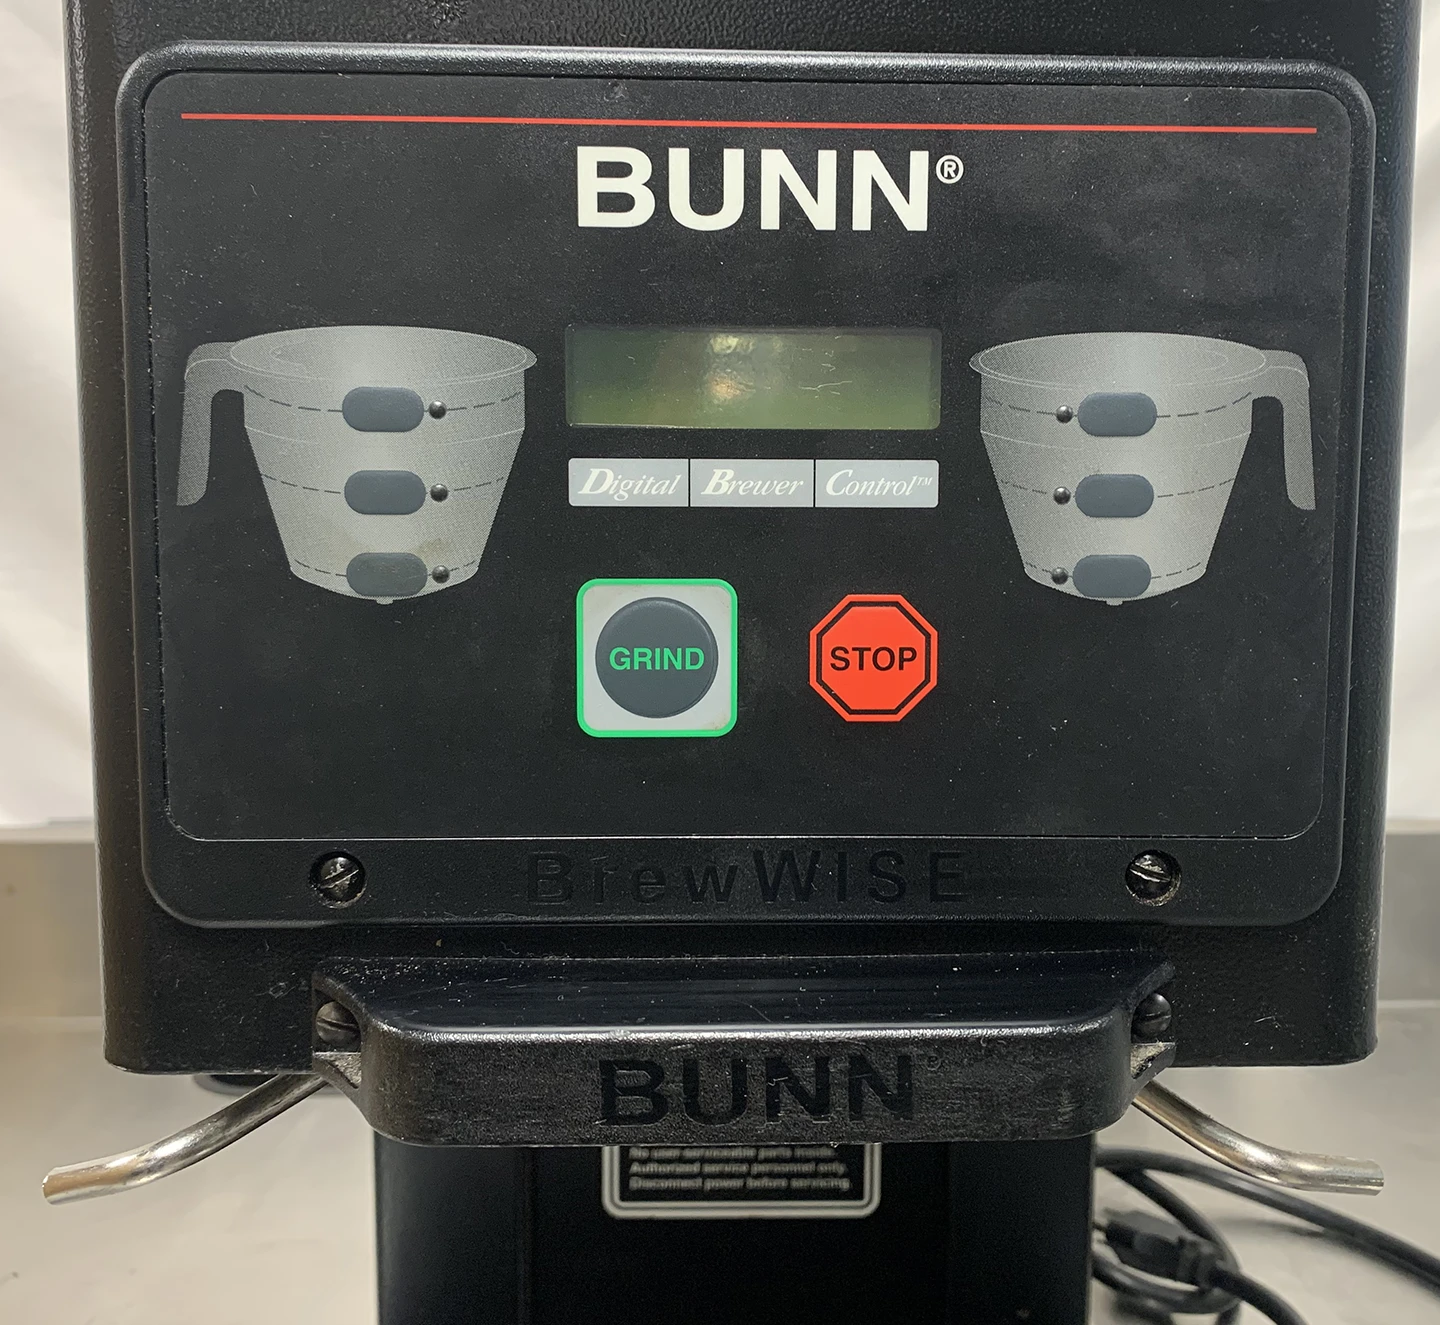 Bunn 35600.0020 BrewWISE MHG Stainless Steel Multi Hopper Coffee